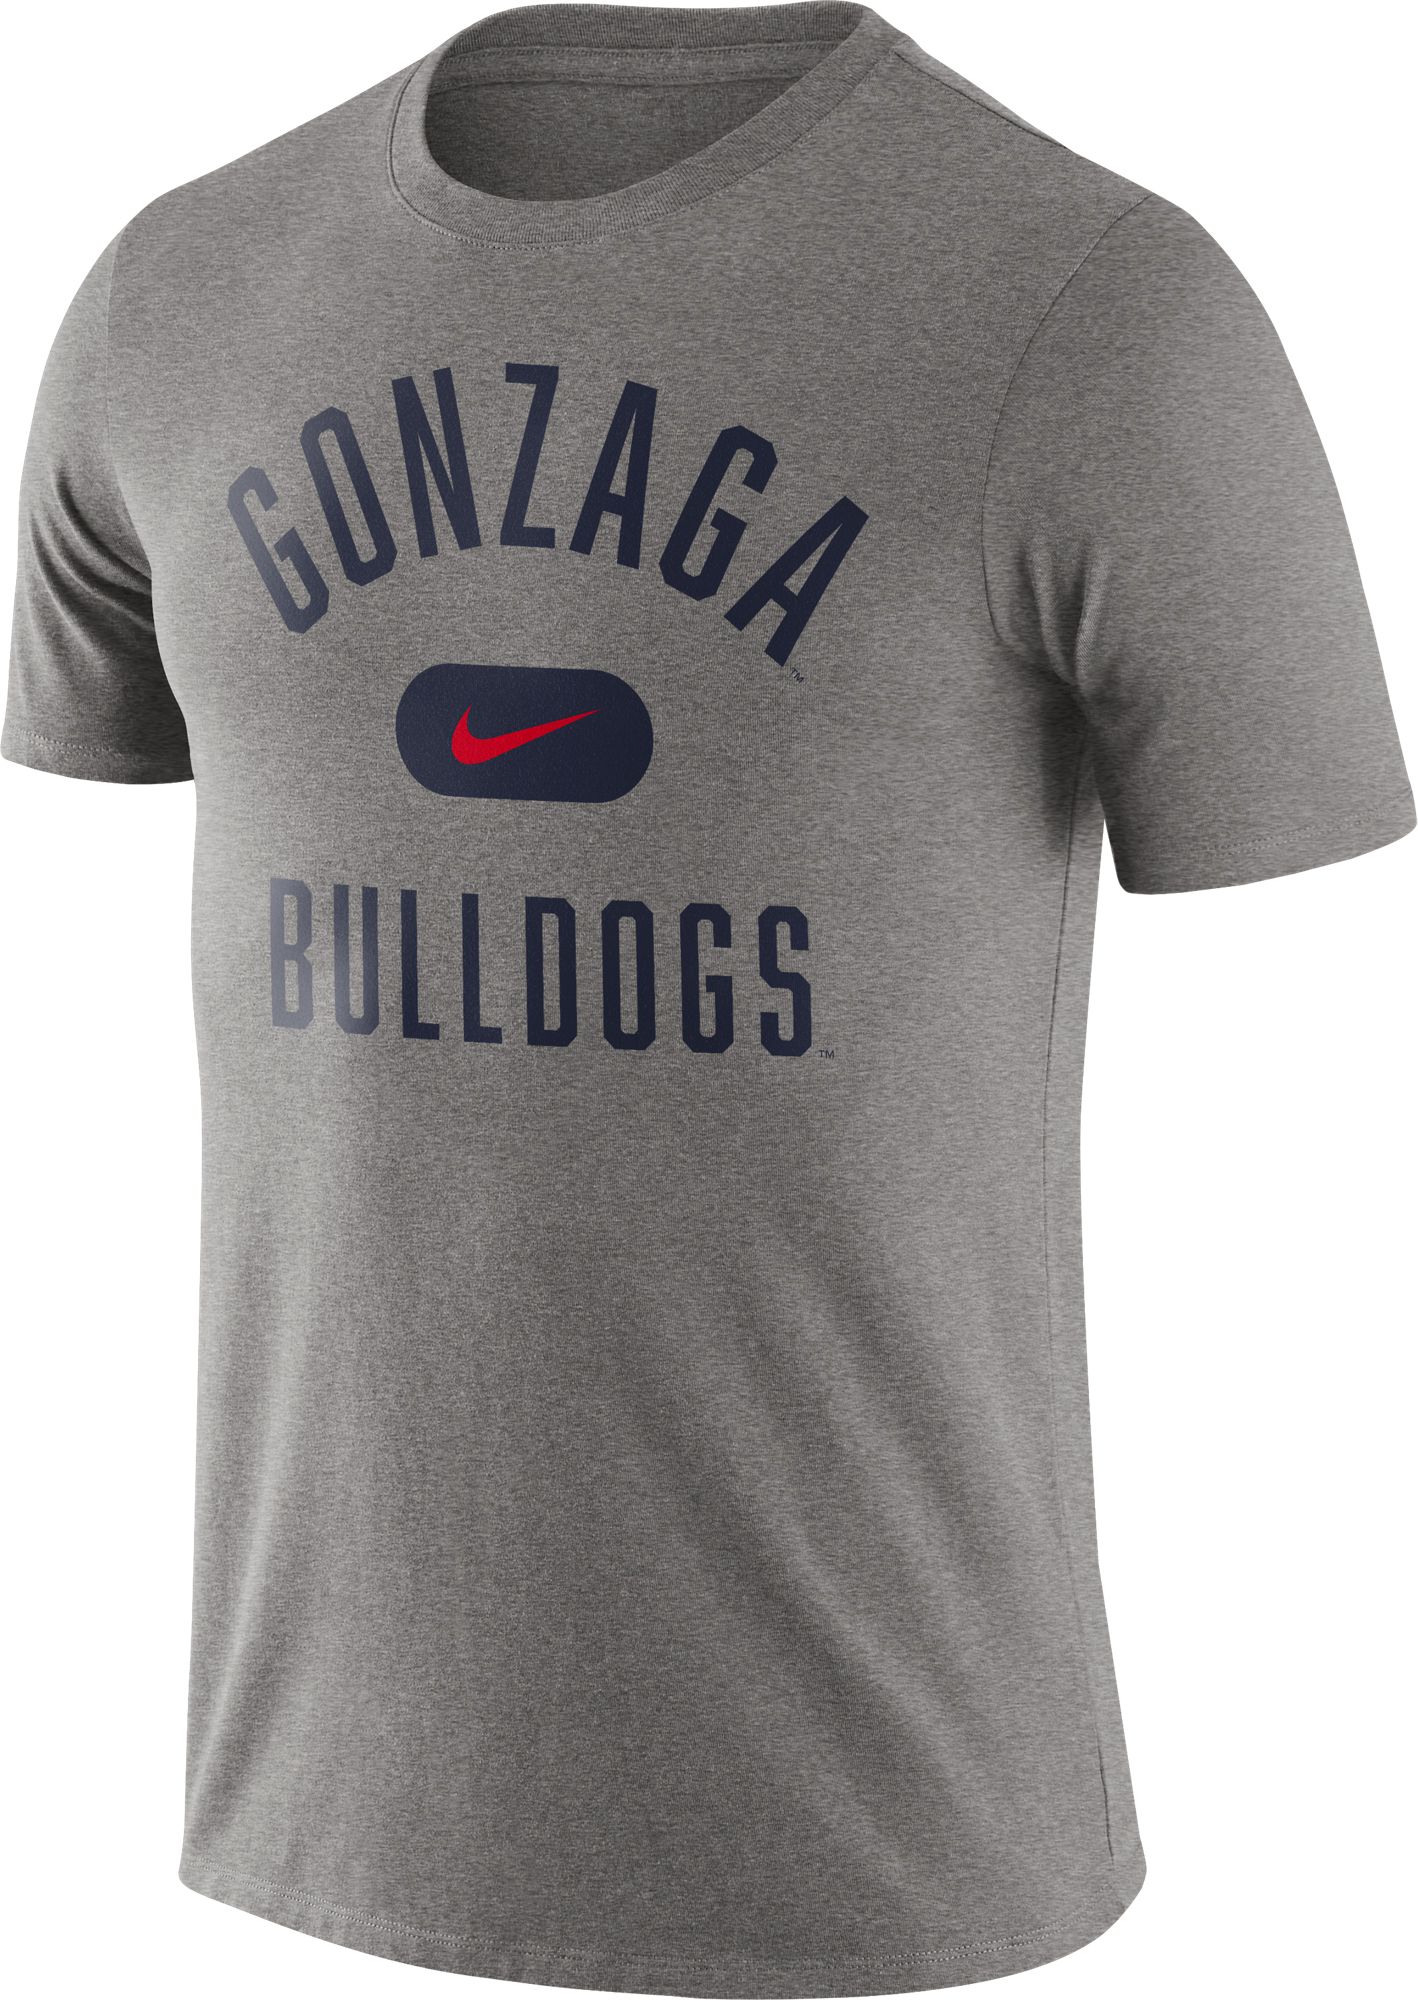 Nike Men's Gonzaga Bulldogs Grey Basketball Team Arch T-Shirt